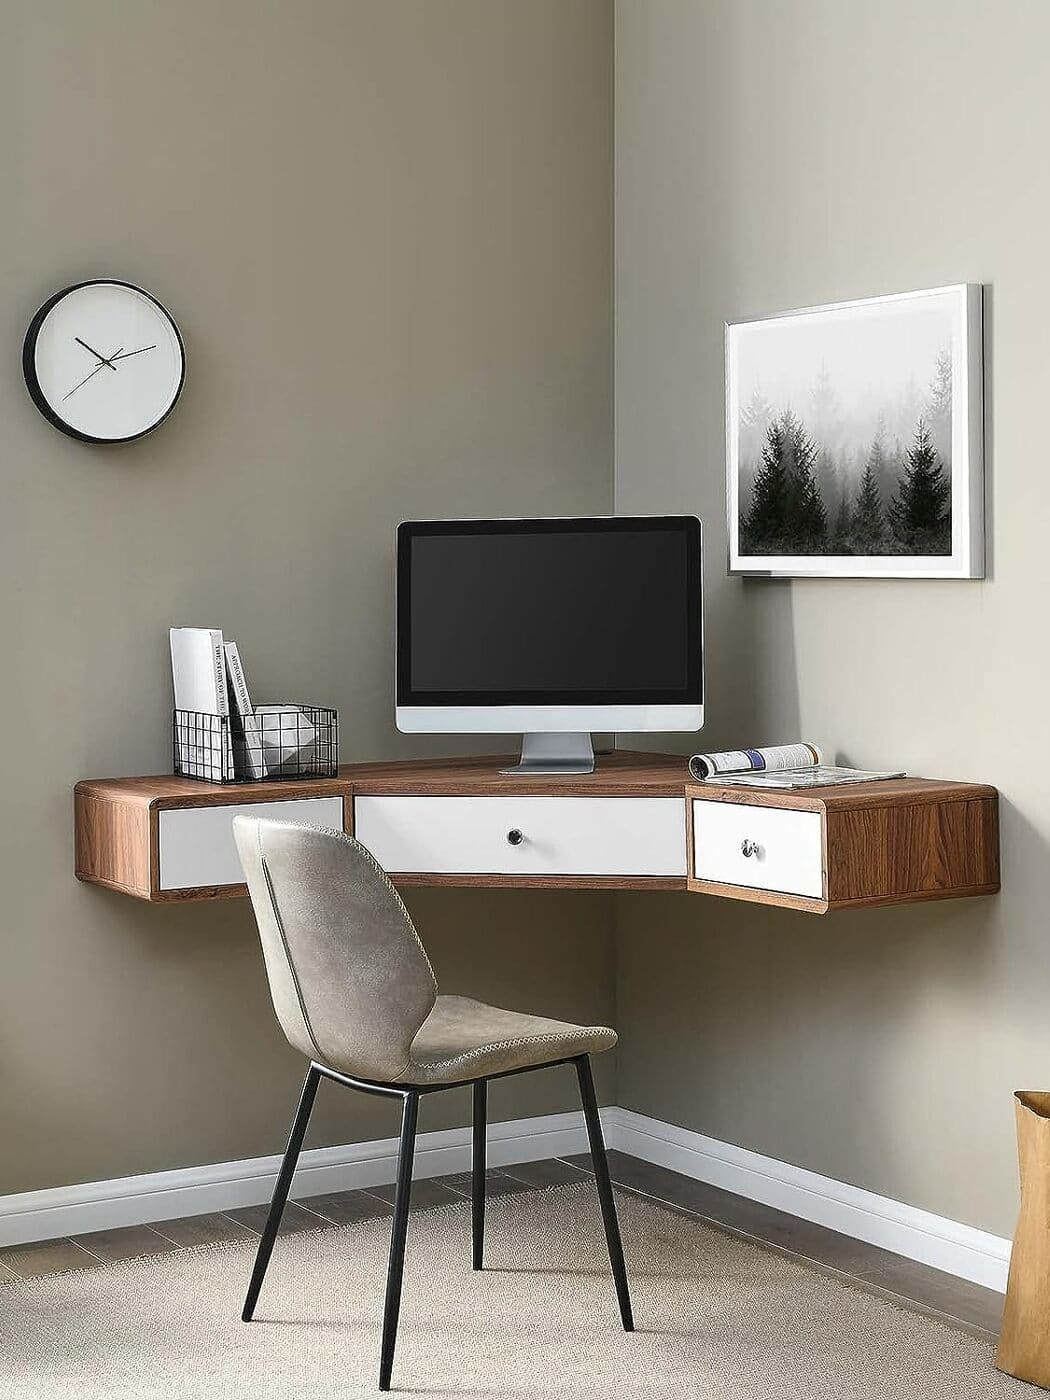 Benefits of using a corner desk